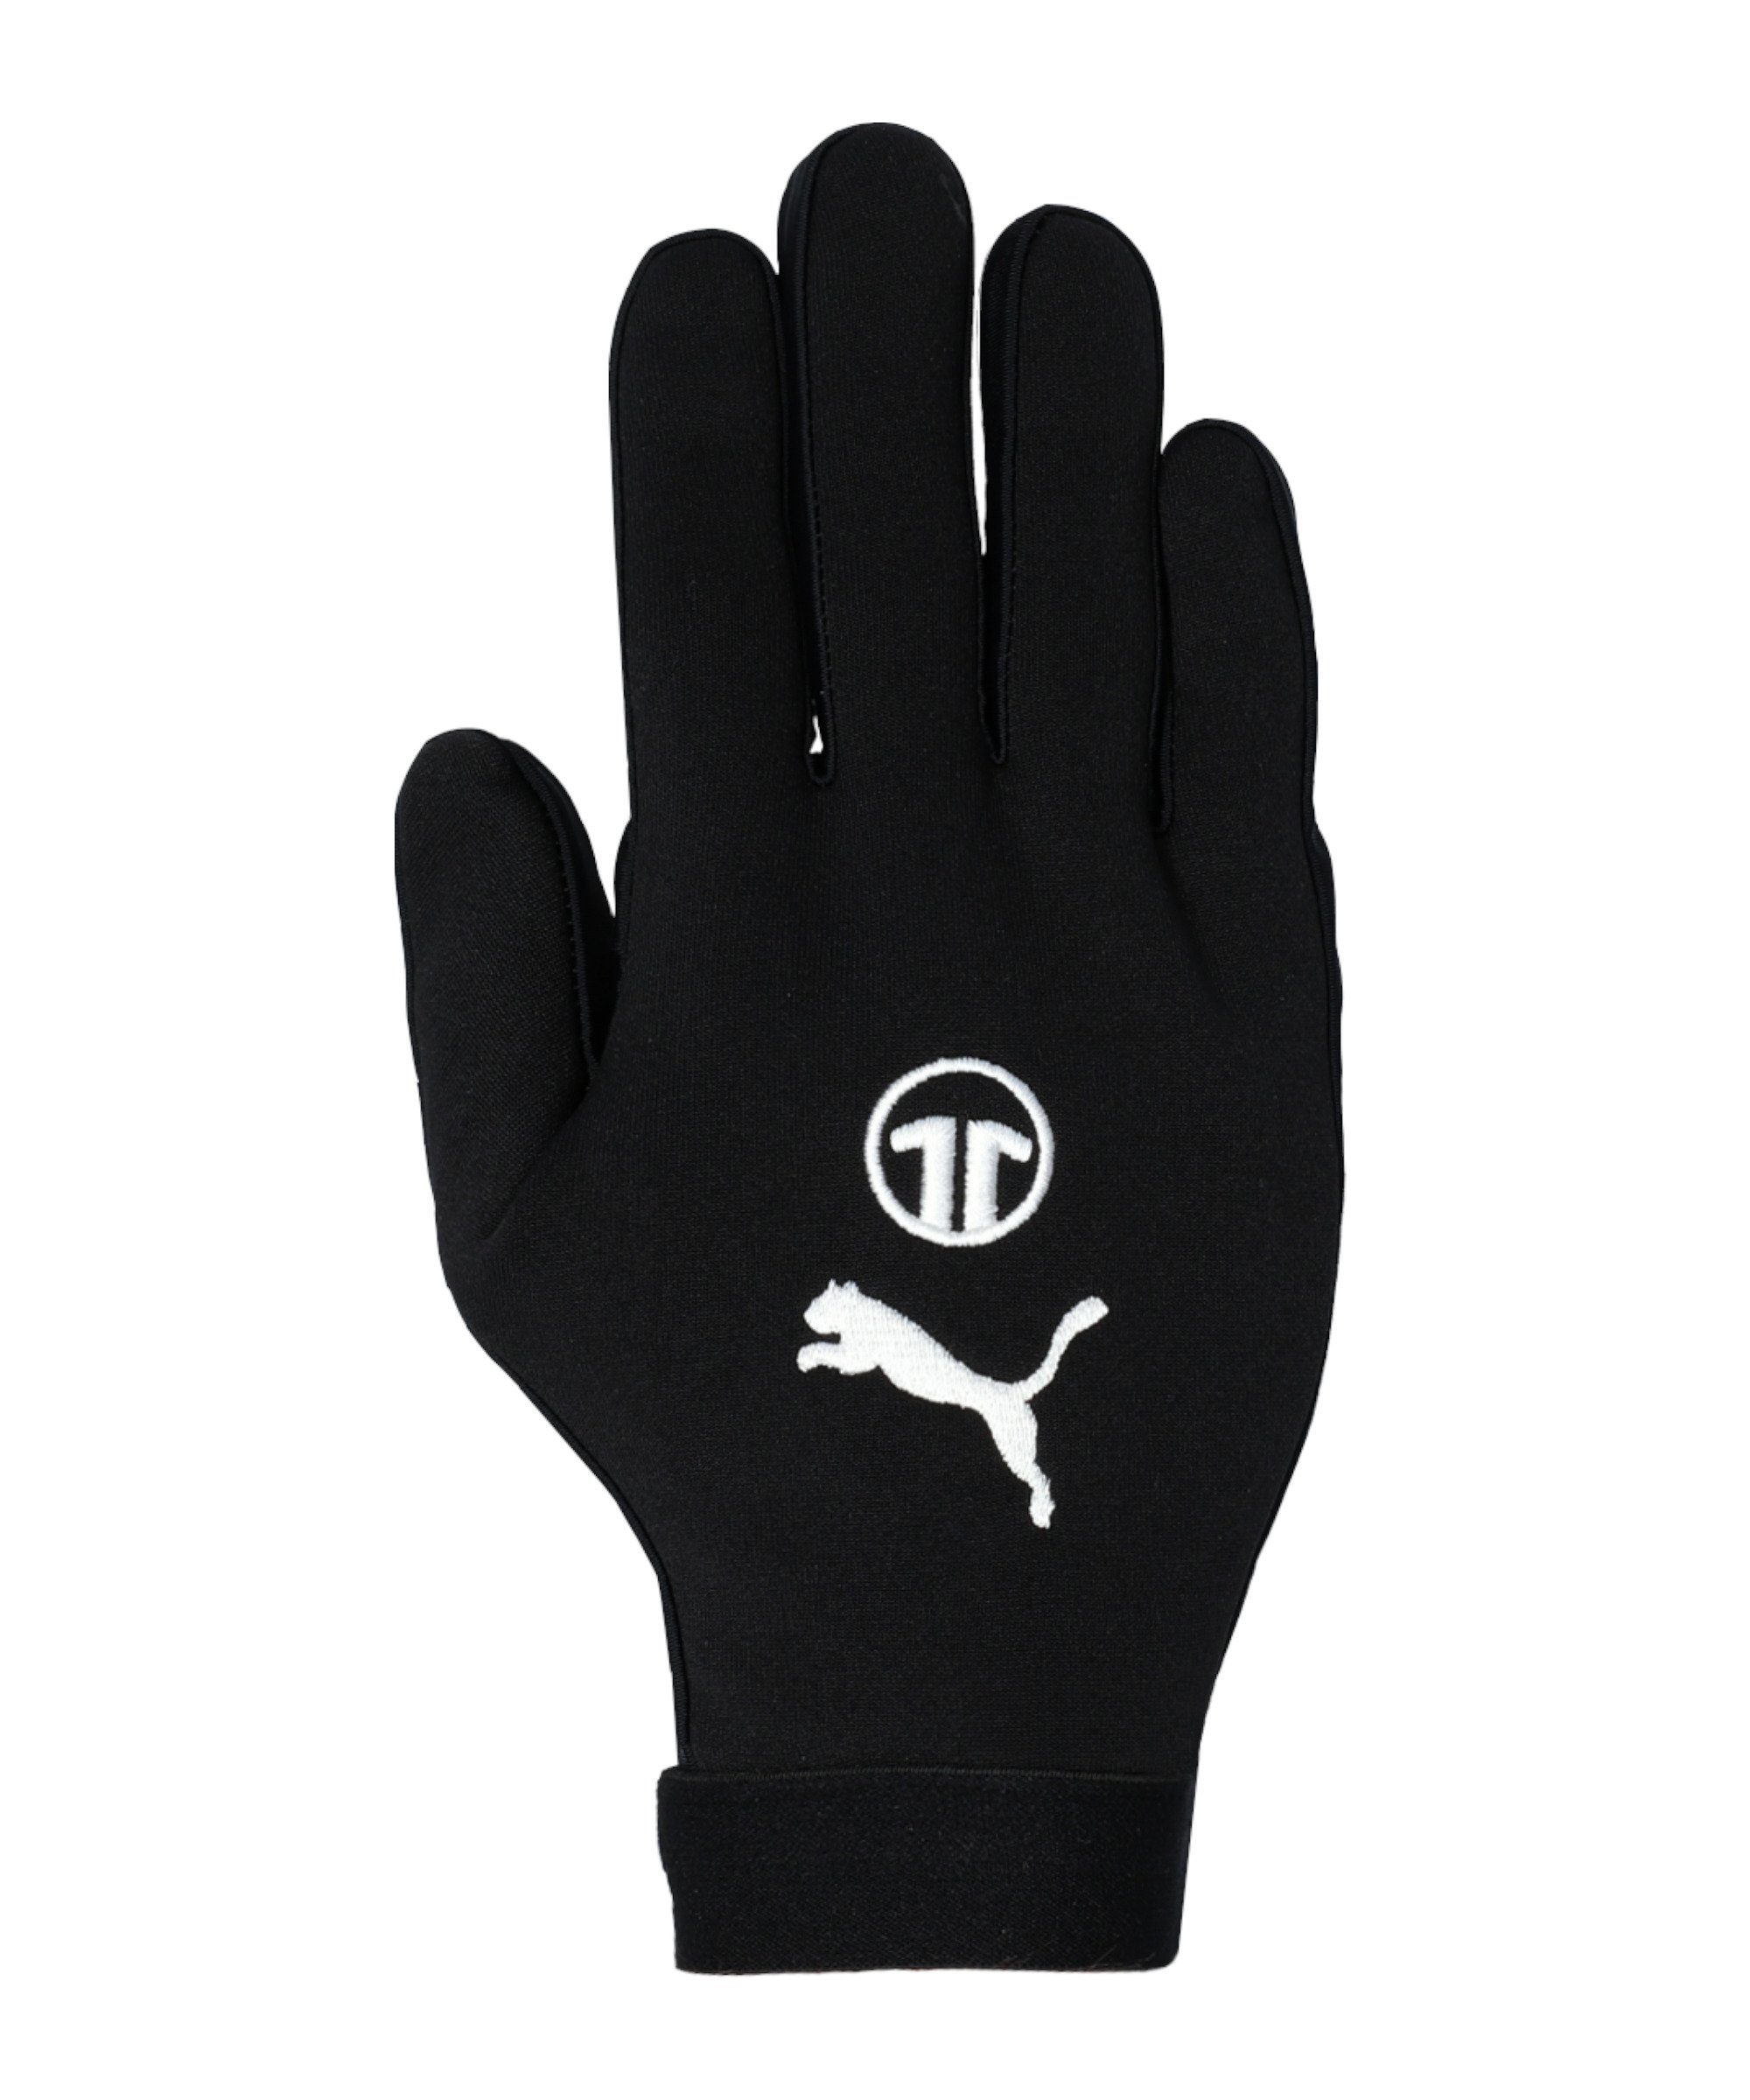 PUMA Feldspielerhandschuhe X 11teamsports Handschuhe